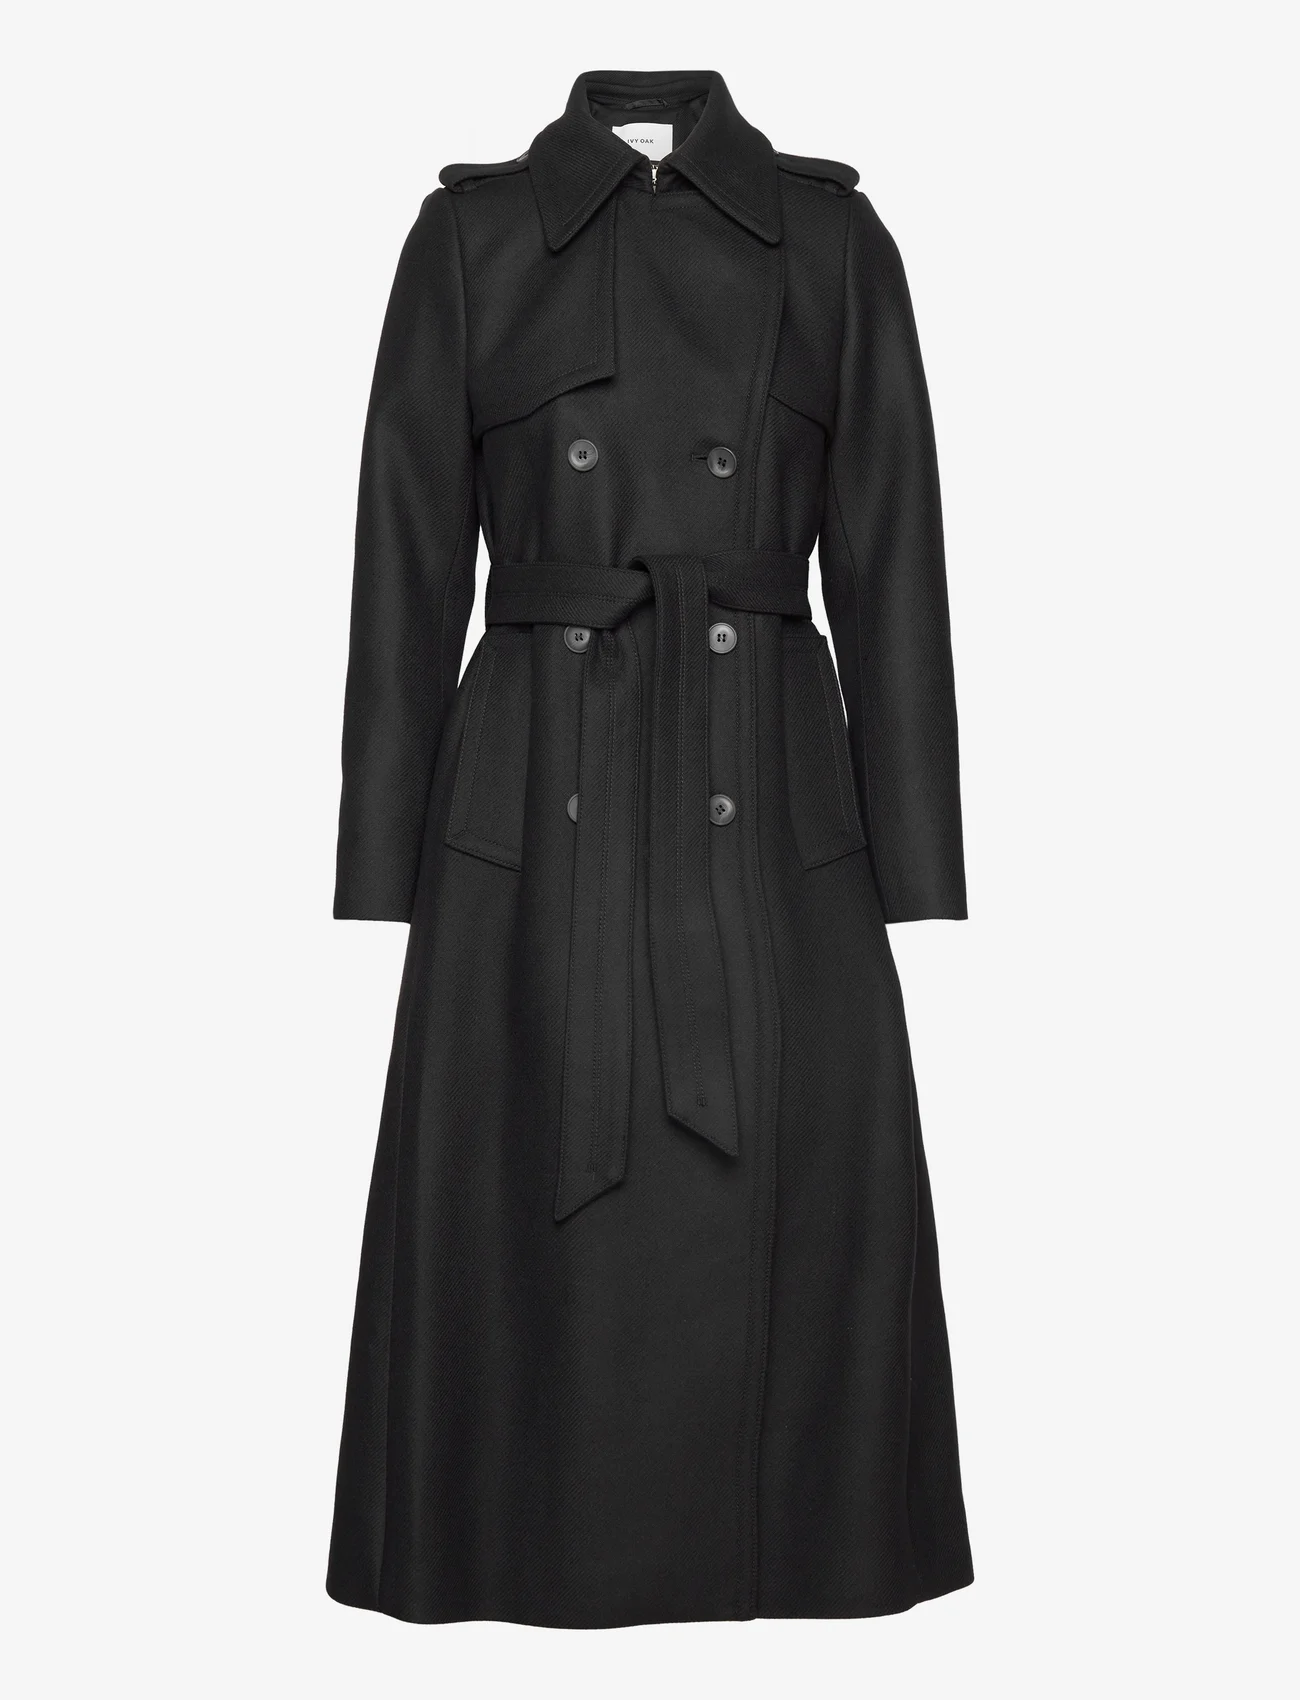 Black/White 36                  EU H&M Trench coat WOMEN FASHION Coats Elegant discount 52% 